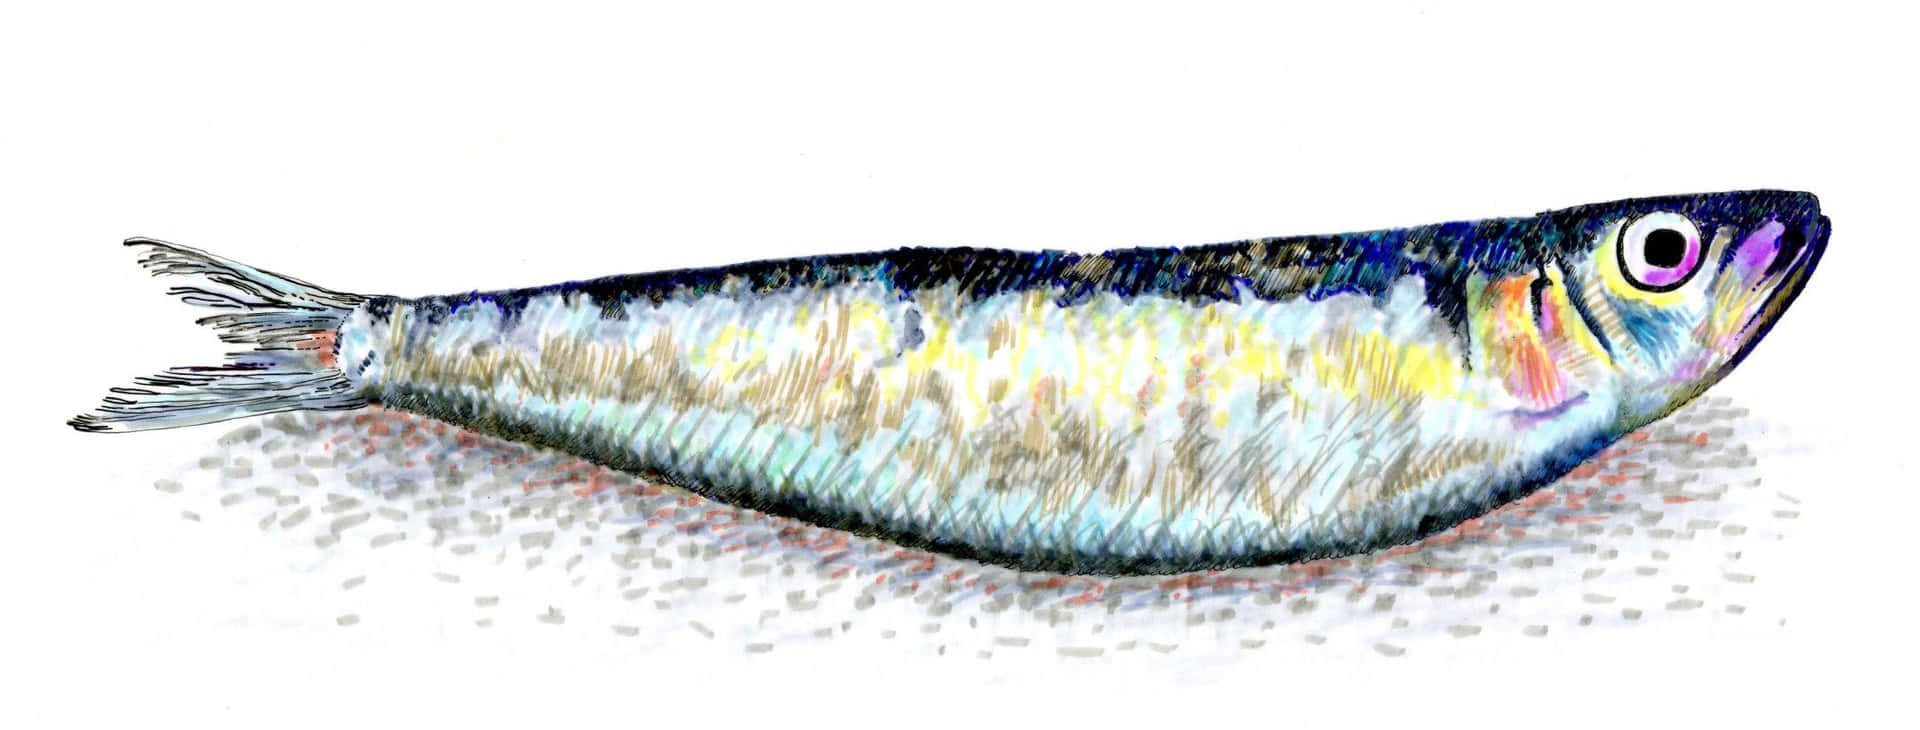 Colorful Sardine Illustration Wallpaper